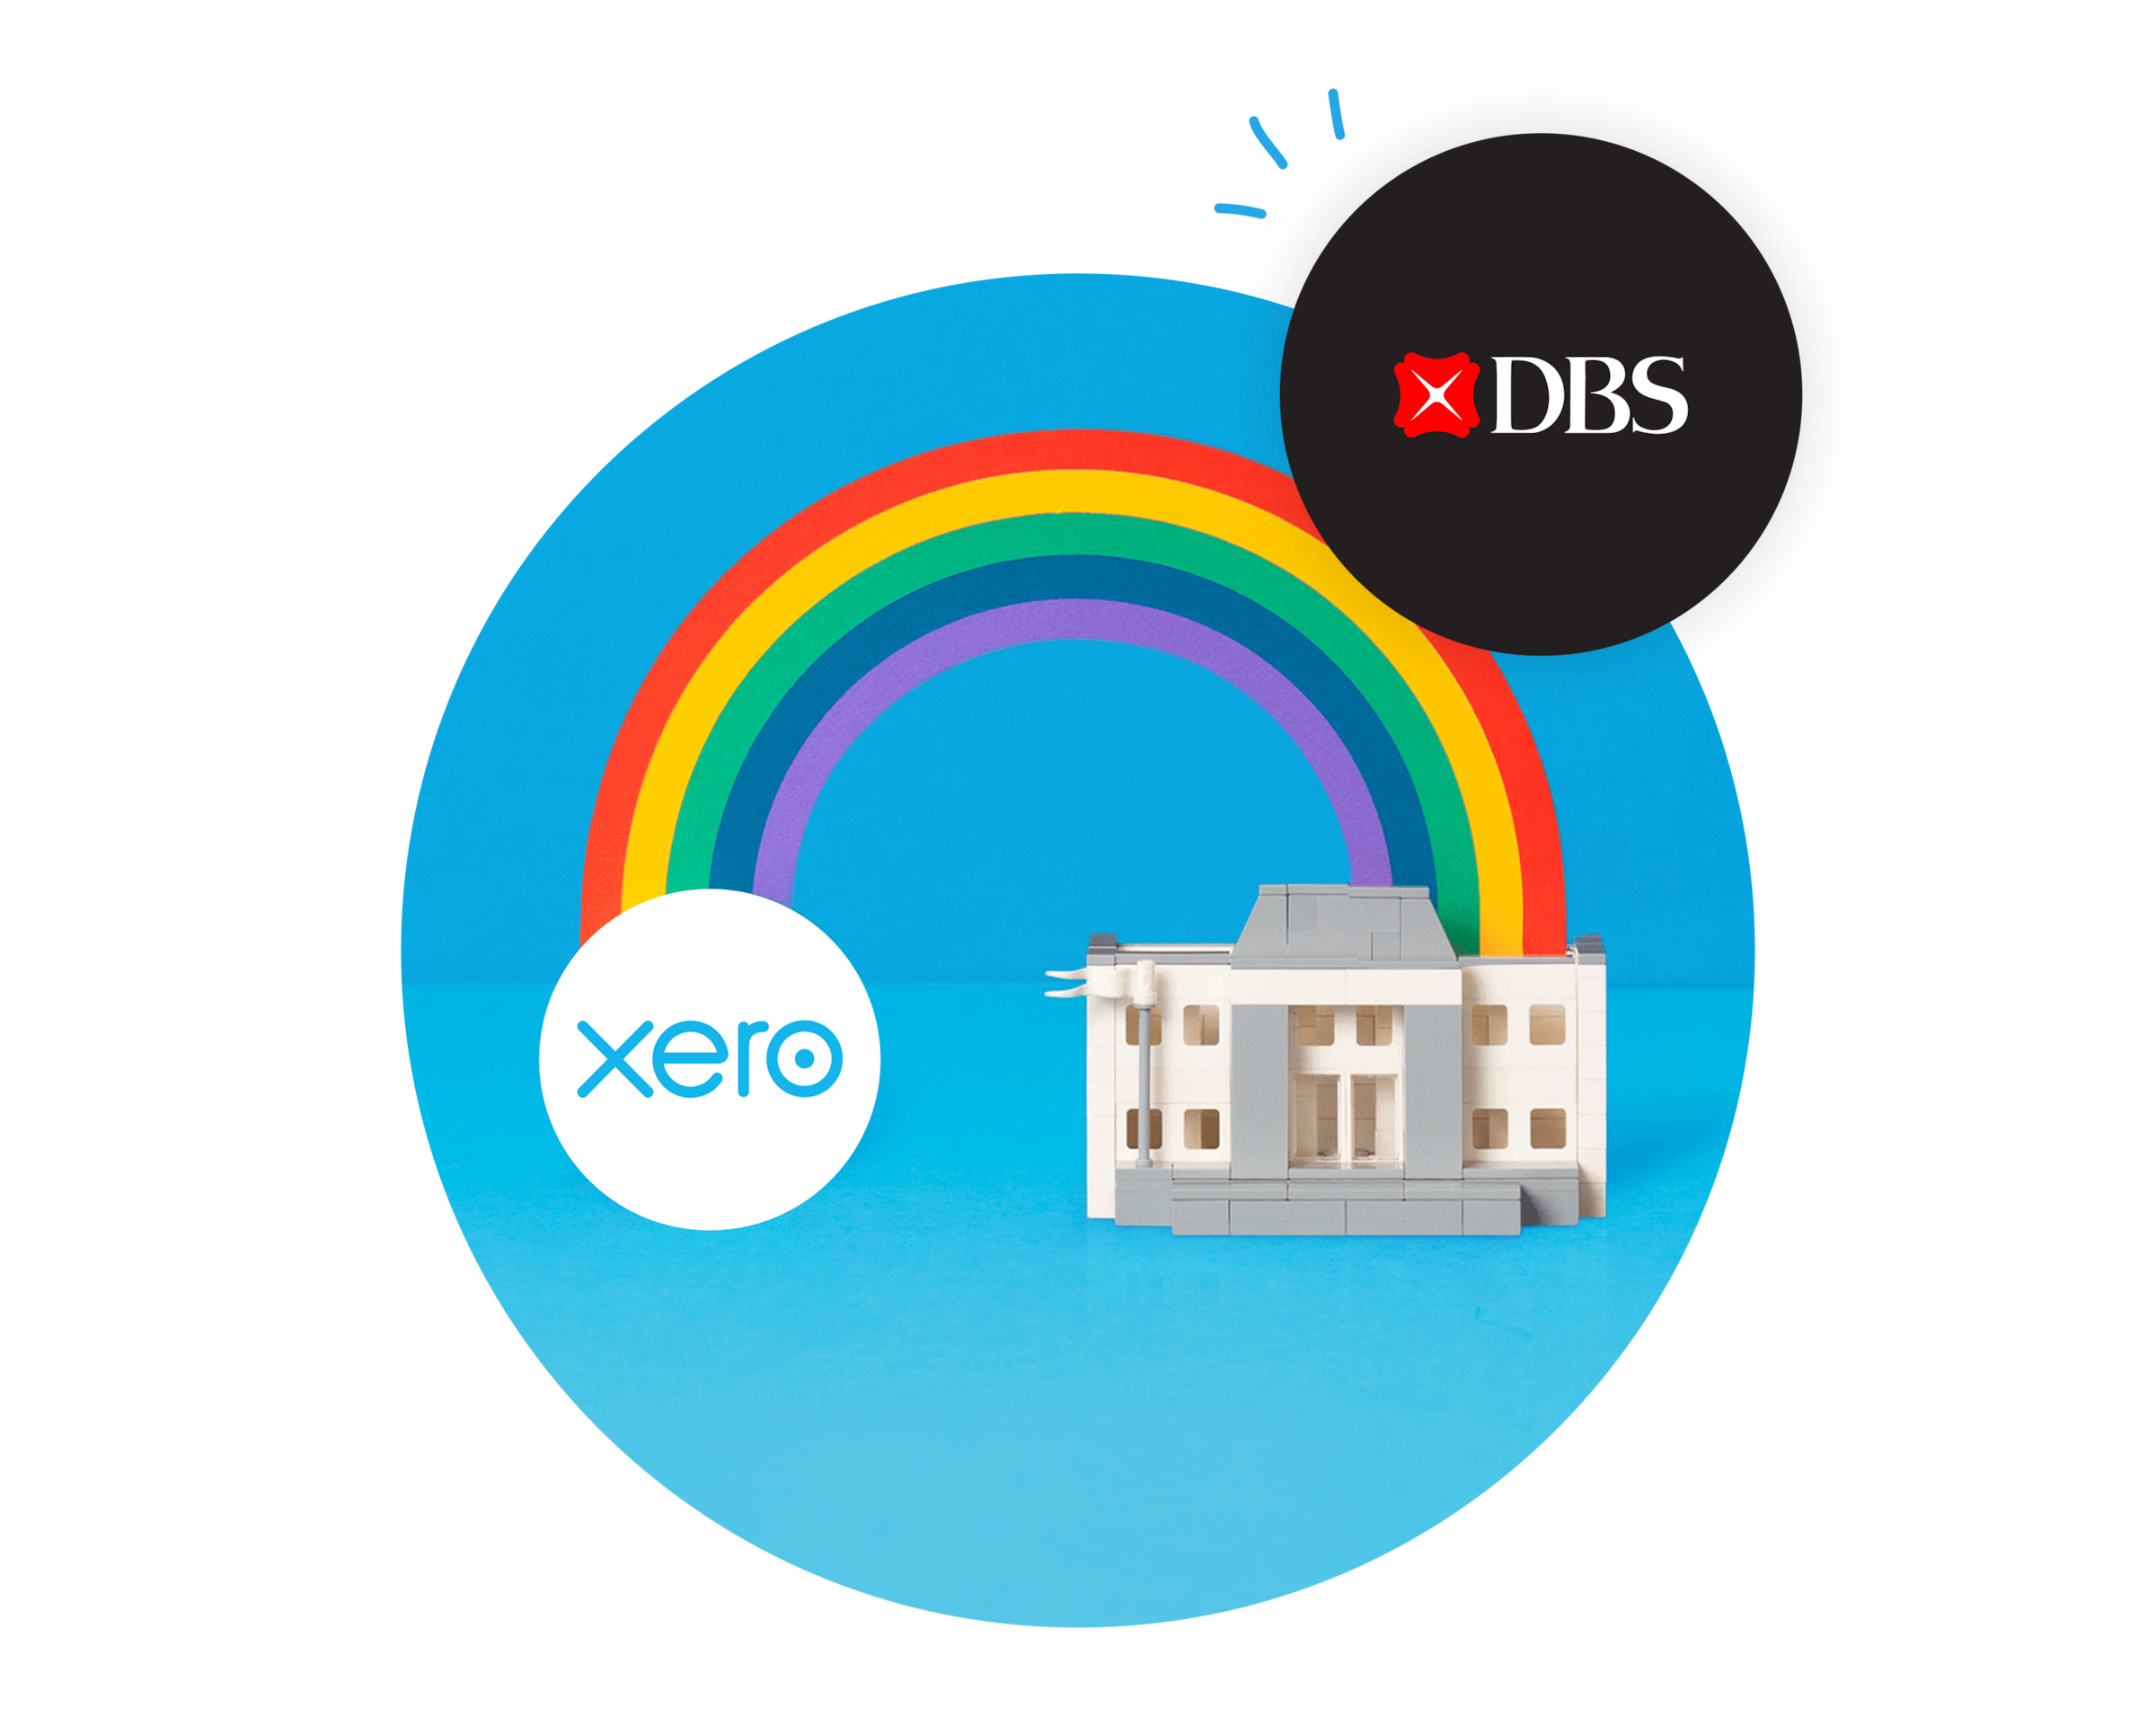 Image of Rainbow connecting the Xero logo and DBS logo